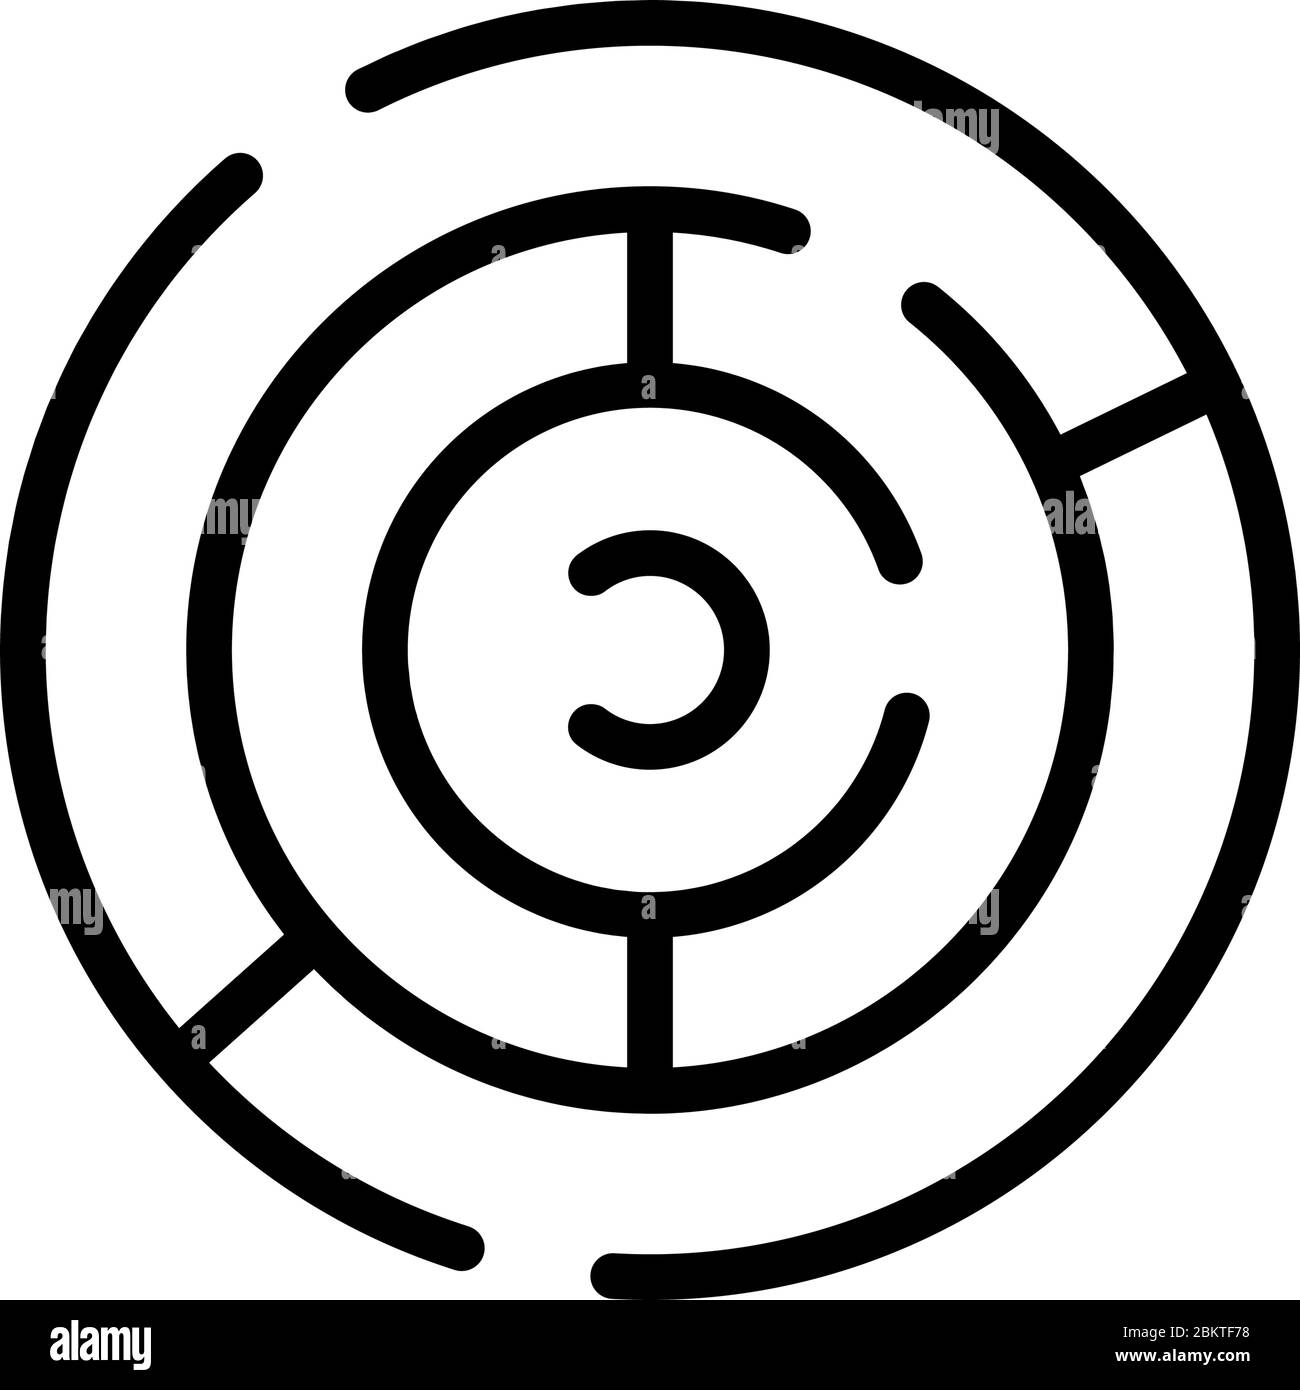 simple circle mazes